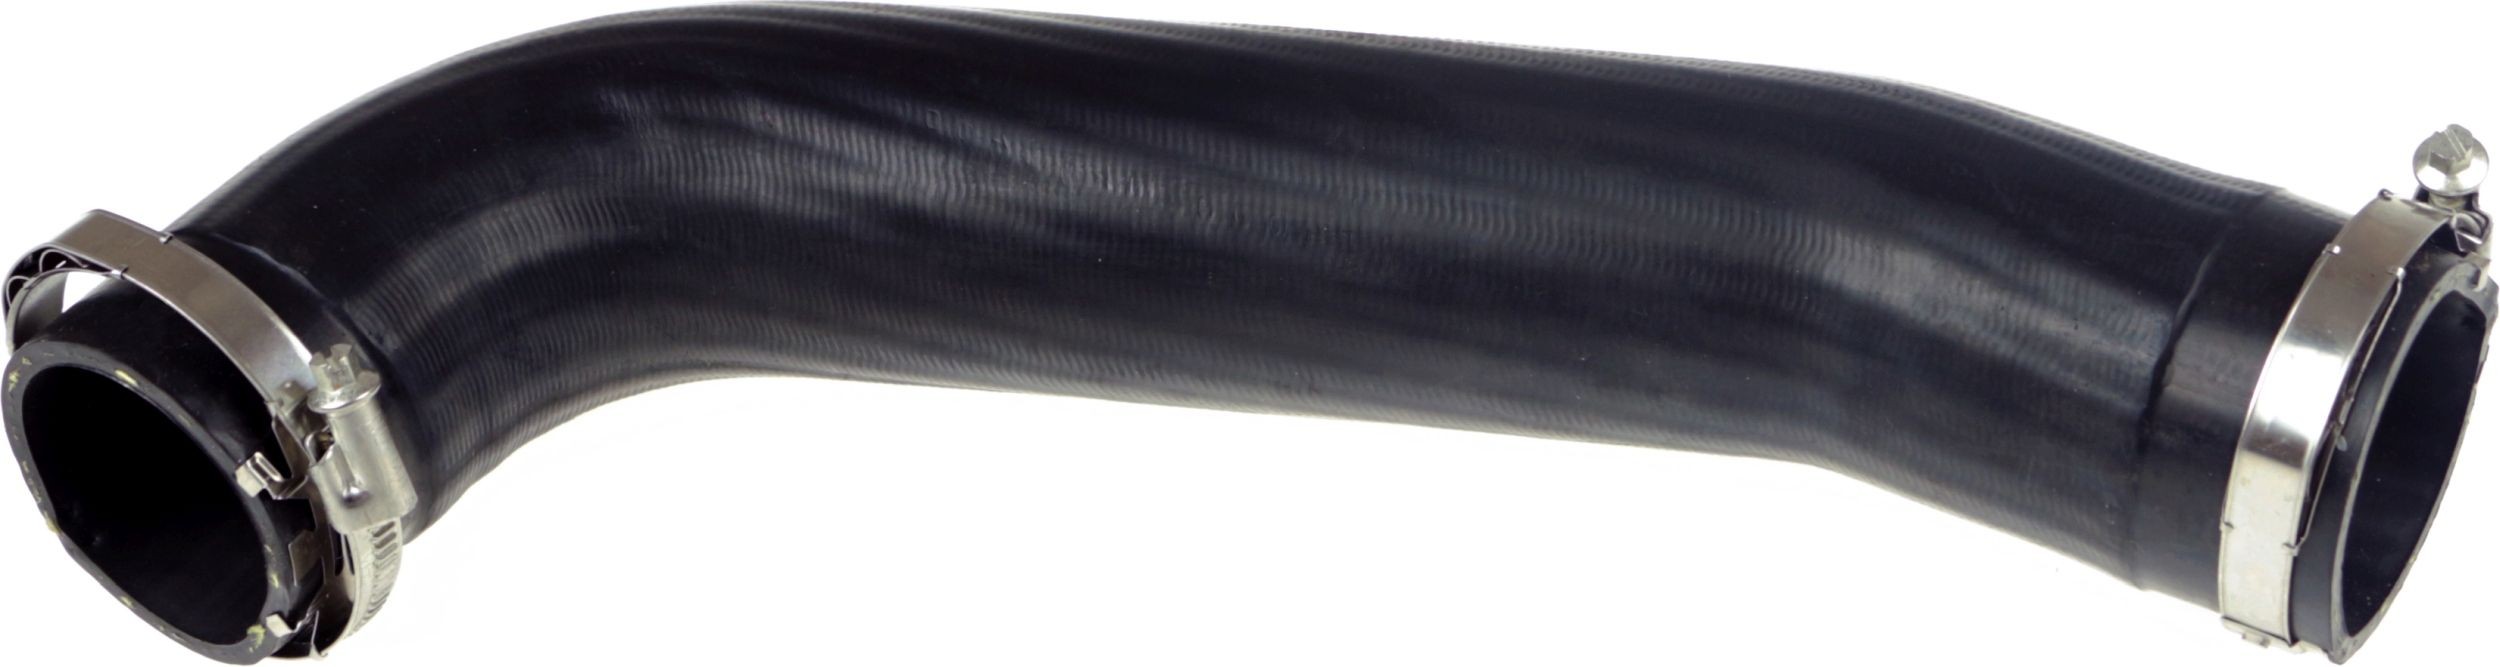 4275-53490 GATES EPDM (ethylene propylene diene Monomer (M-class) rubber) Hose Length: 435mm Coolant Hose 05-3490 buy